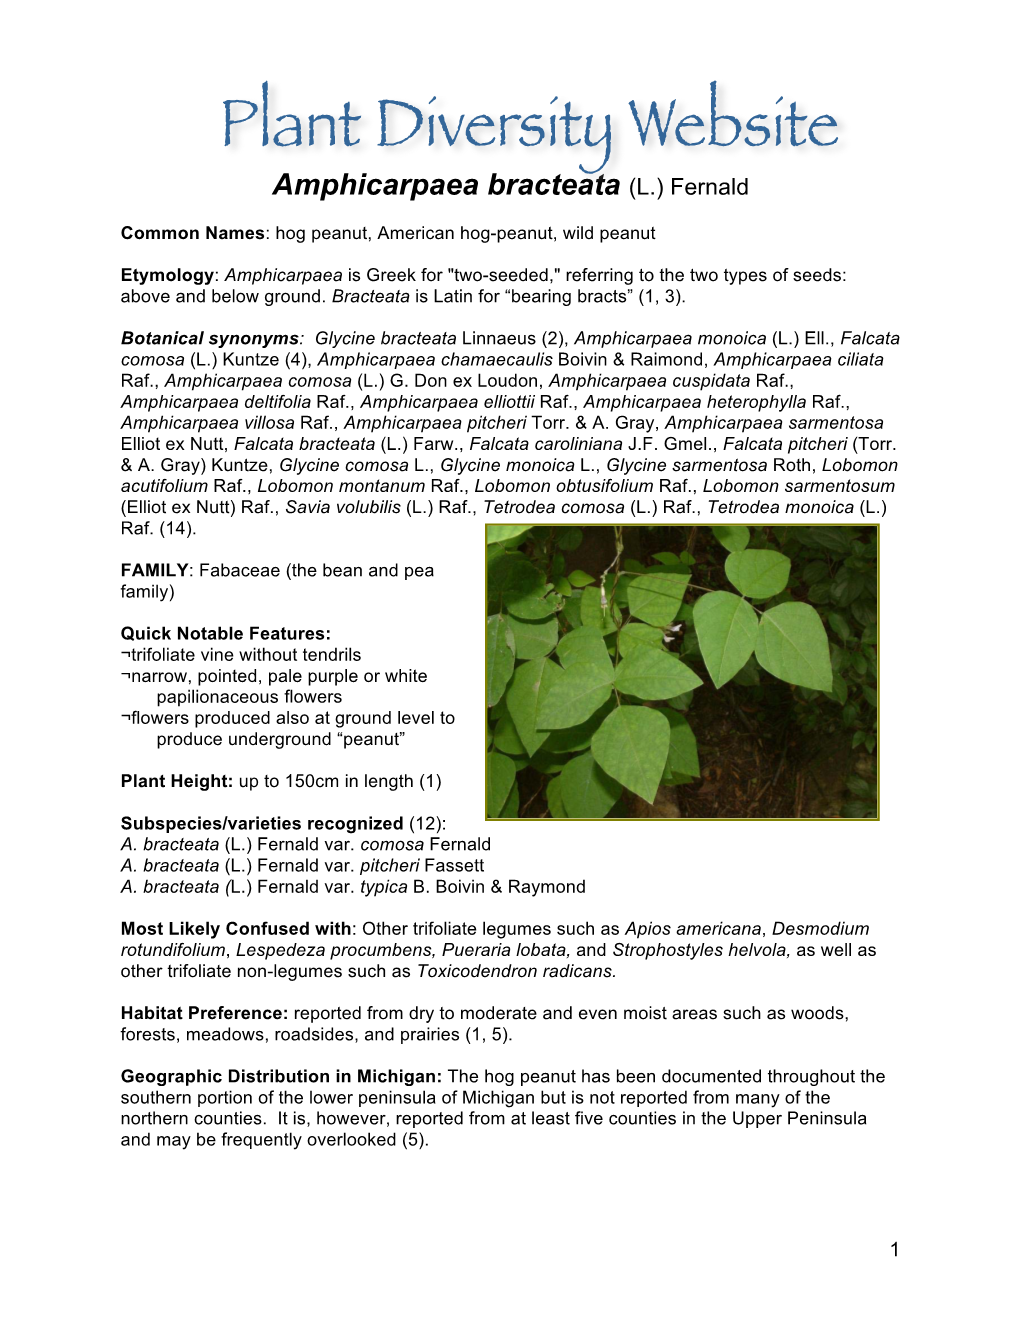 Amphicarpaea Bracteata (L.) Fernald